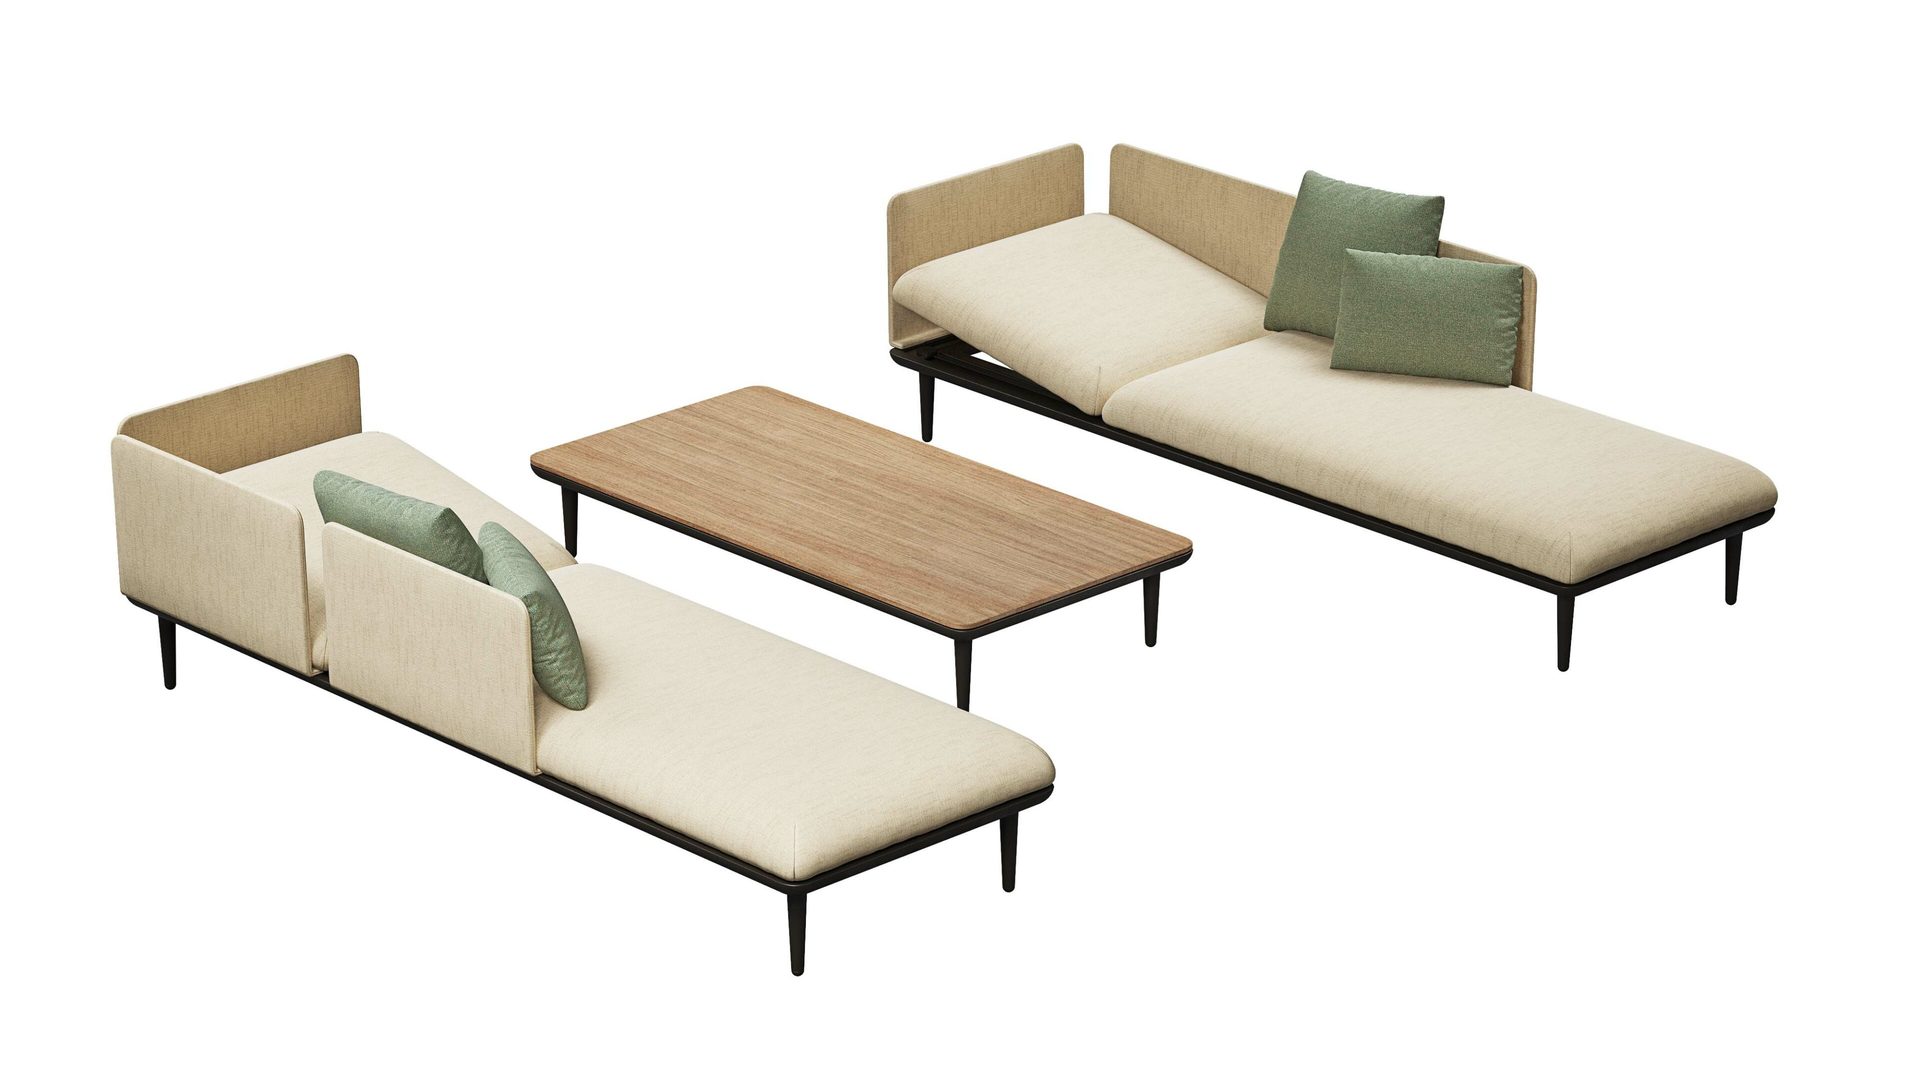 Royal Botania Styletto Lounge modulaire outdoor bank sofa set 5 HORA Barneveld 1.jpg